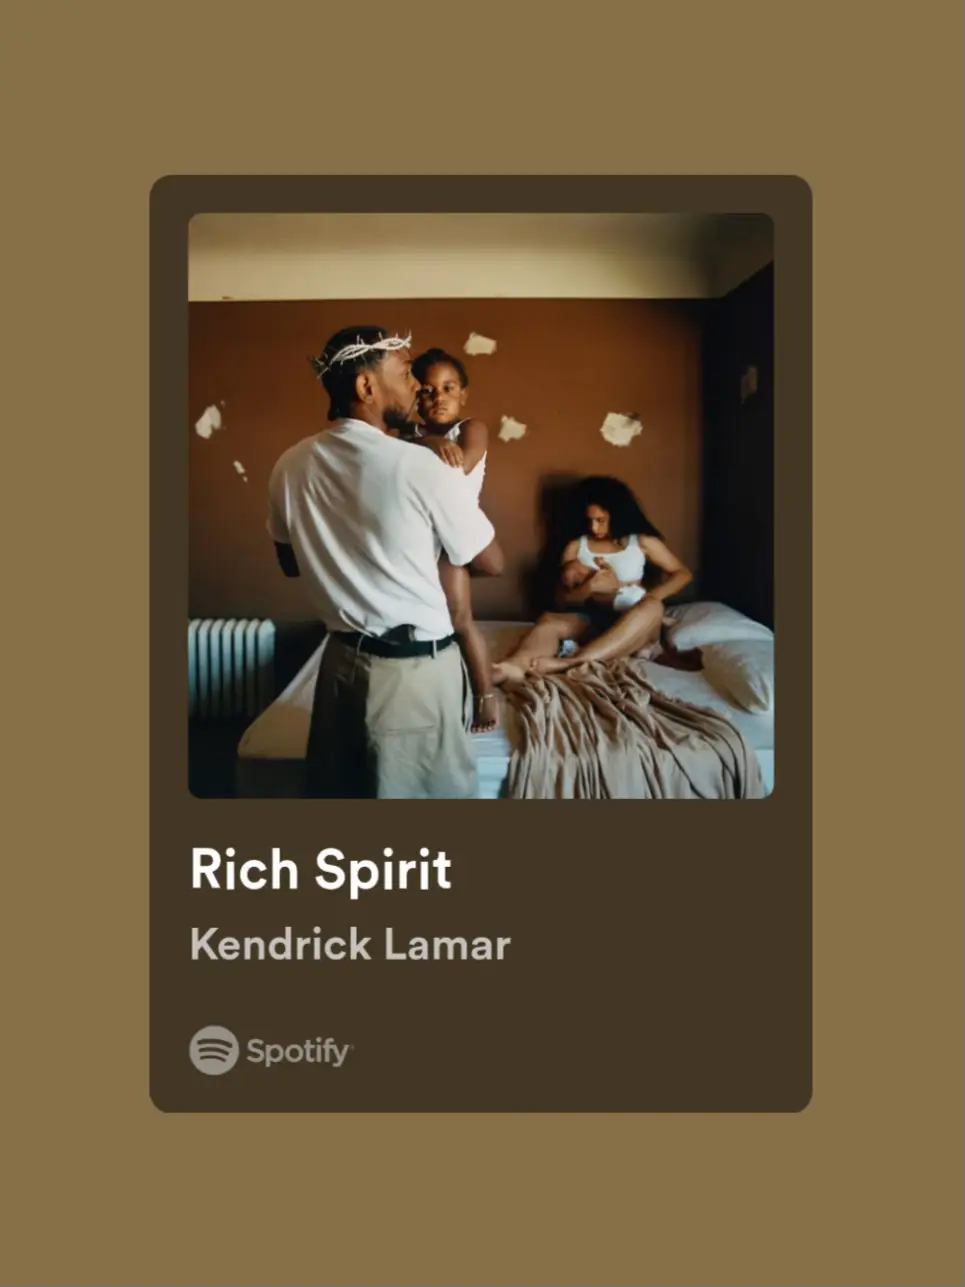  A Spotify ad for Kendrick Lamar.